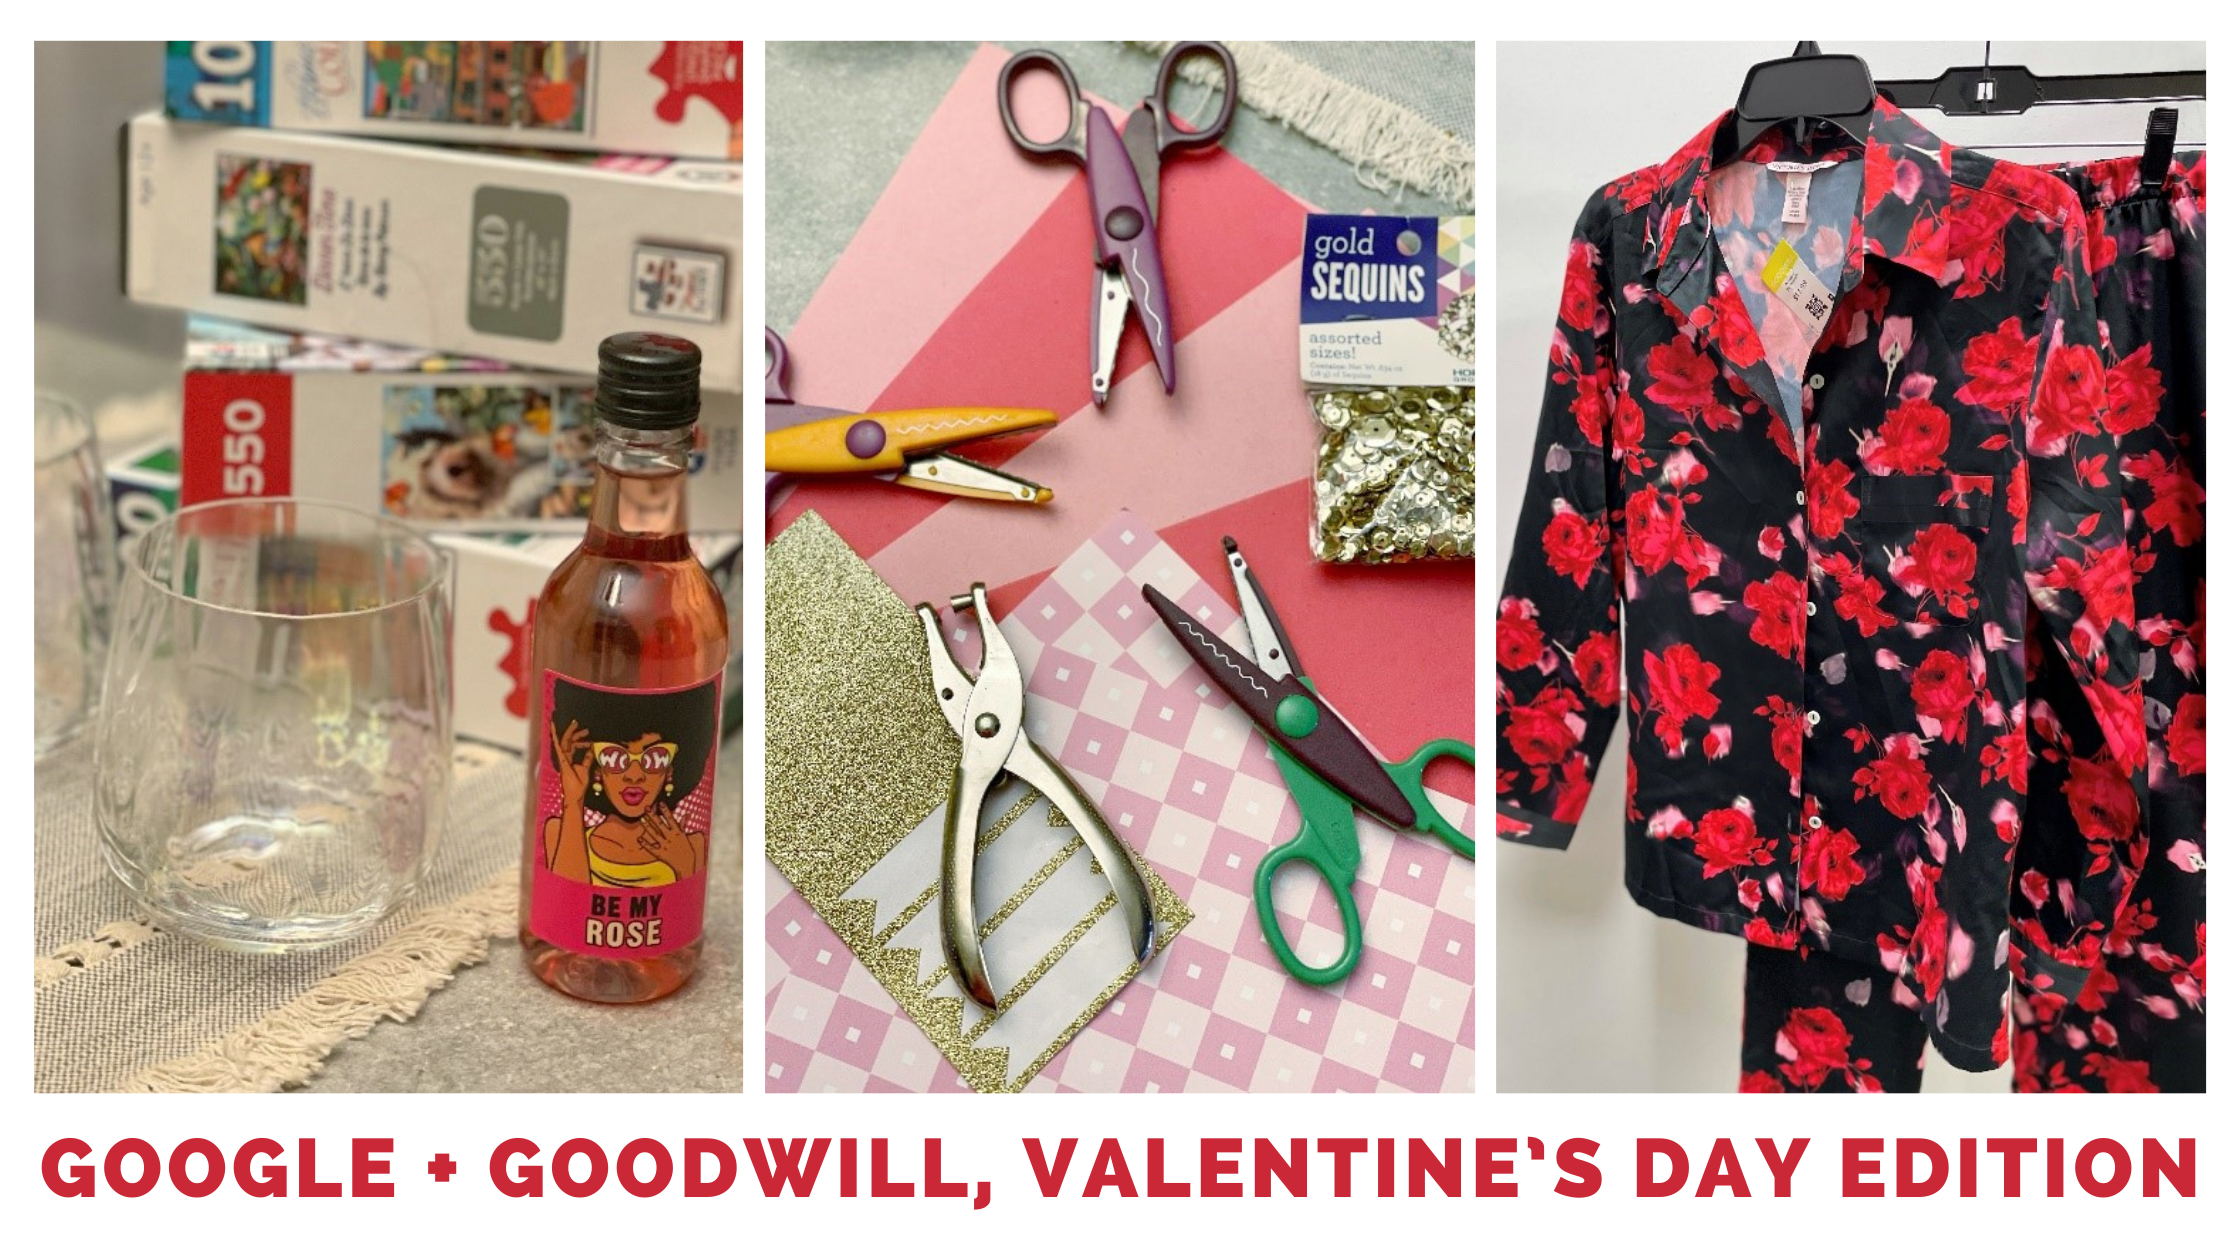 Google + Goodwill, Valentine’s Day Edition